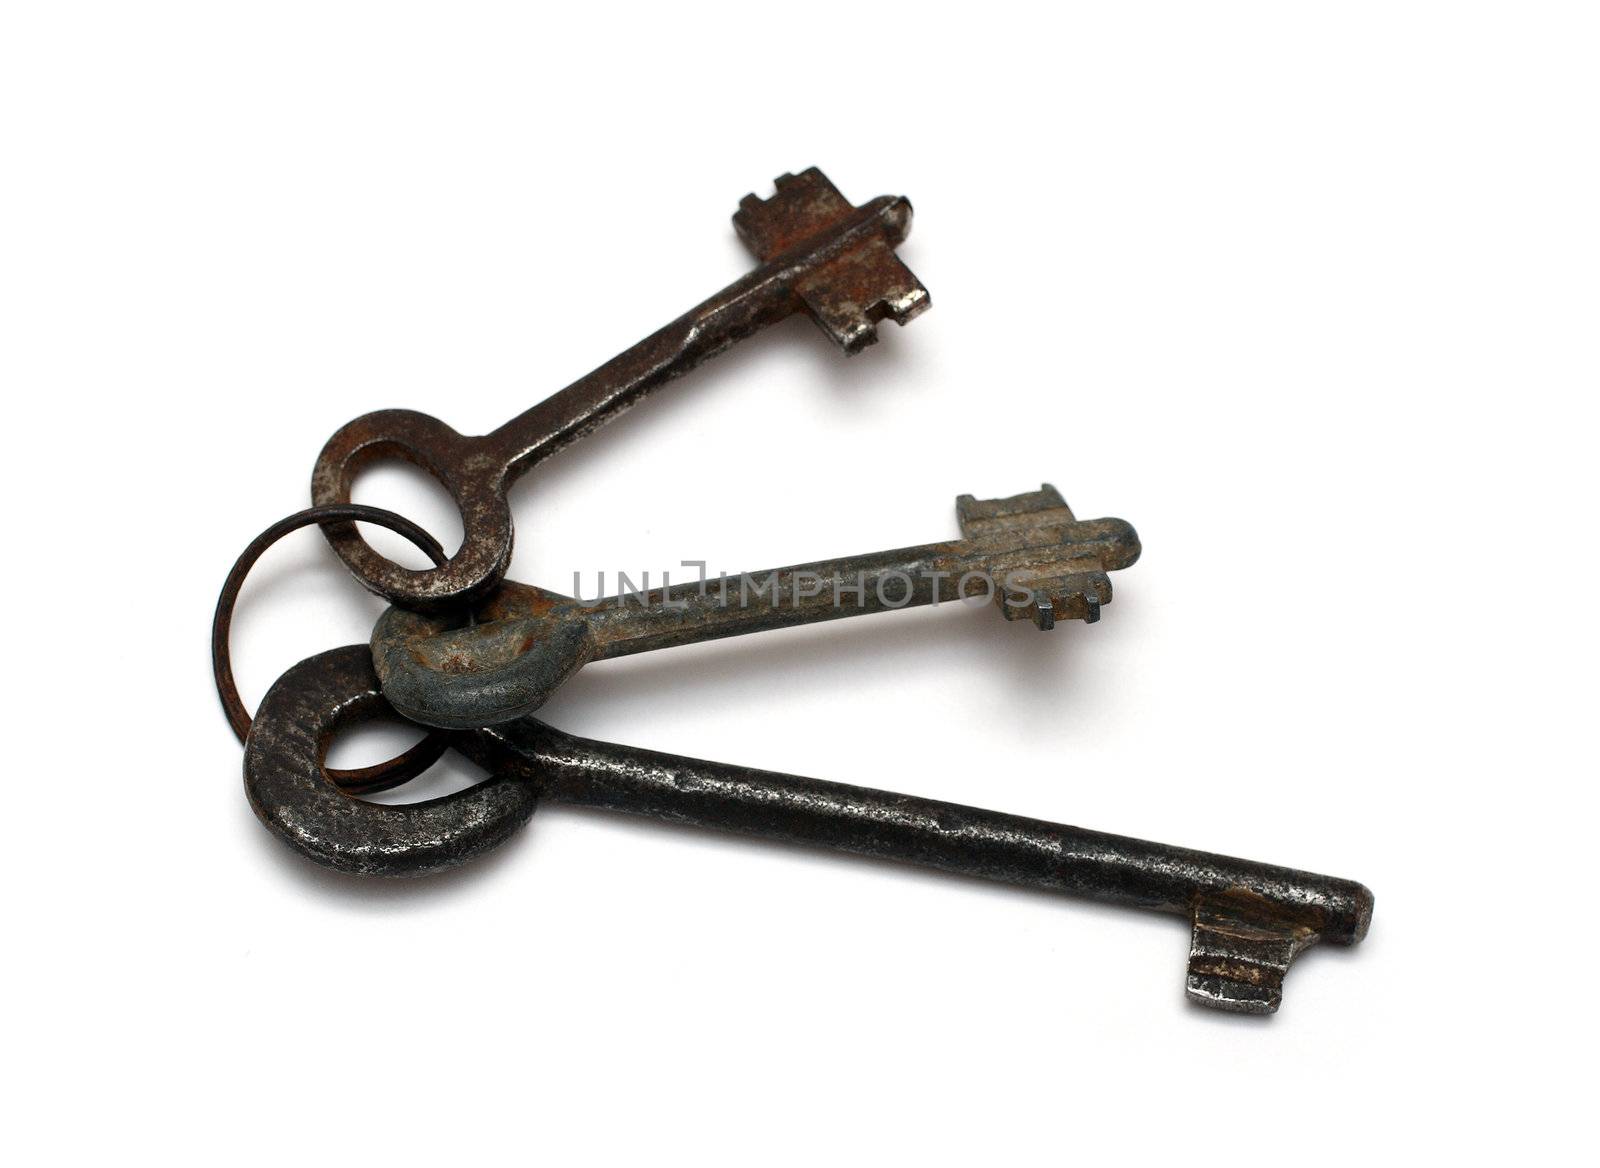 old rusty keys by Mikko